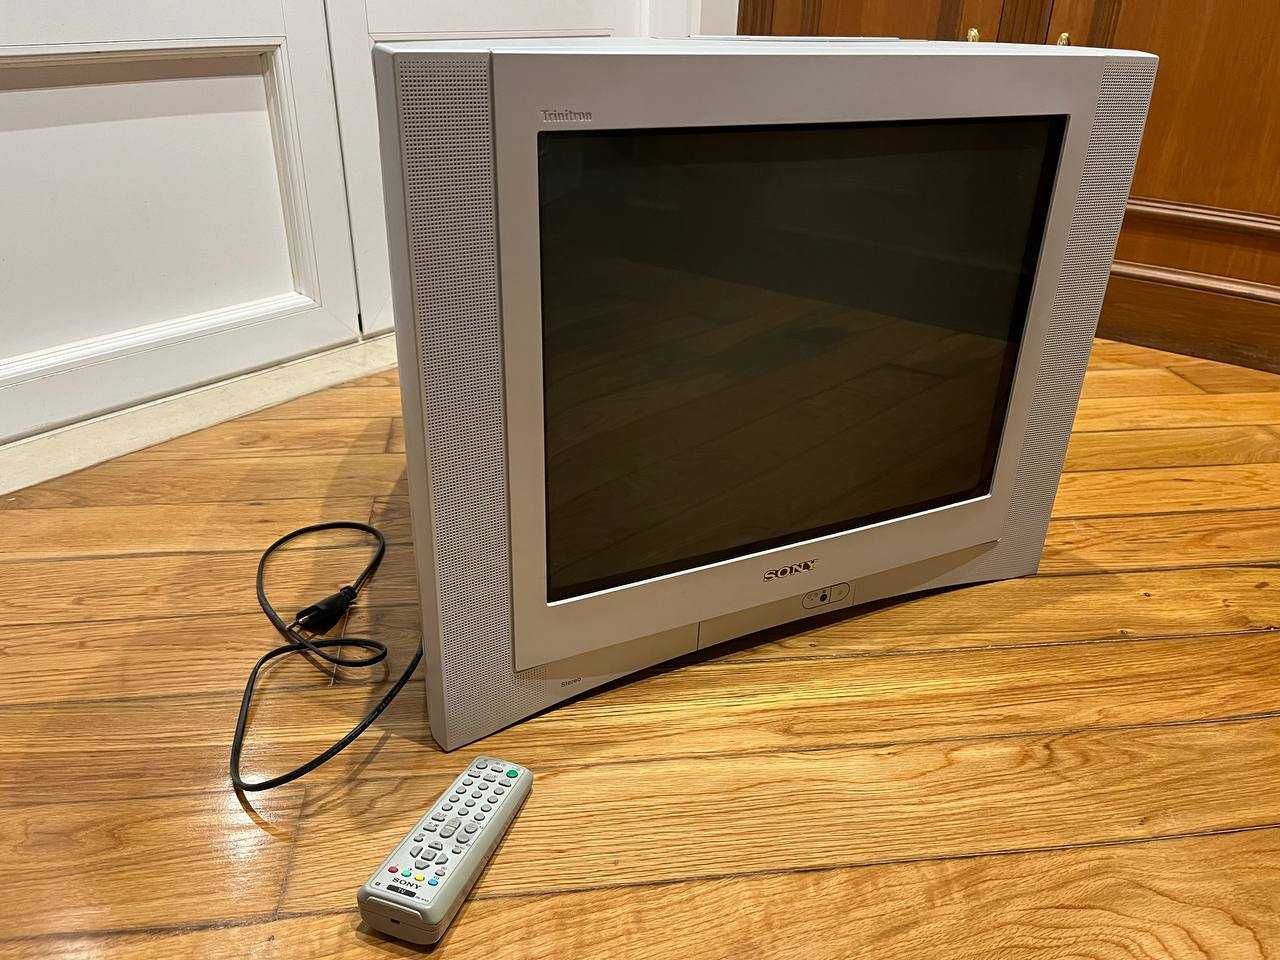 TV SONY - 51 cm Diagonal Ecrã